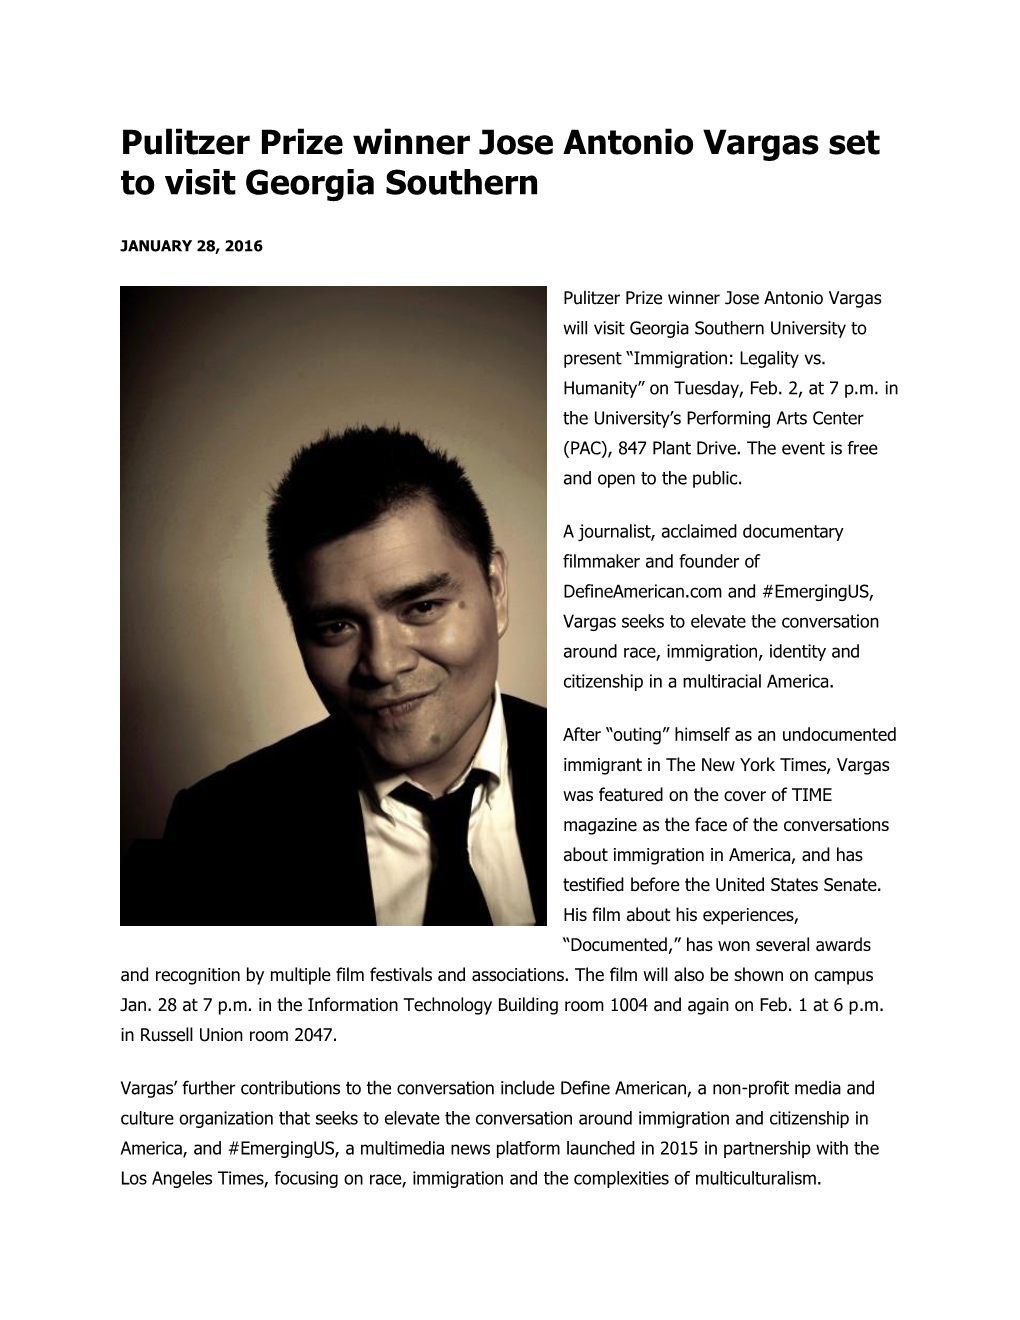 Pulitzer Prize Winner Jose Antonio Vargas Set to Visit Georgia Southern